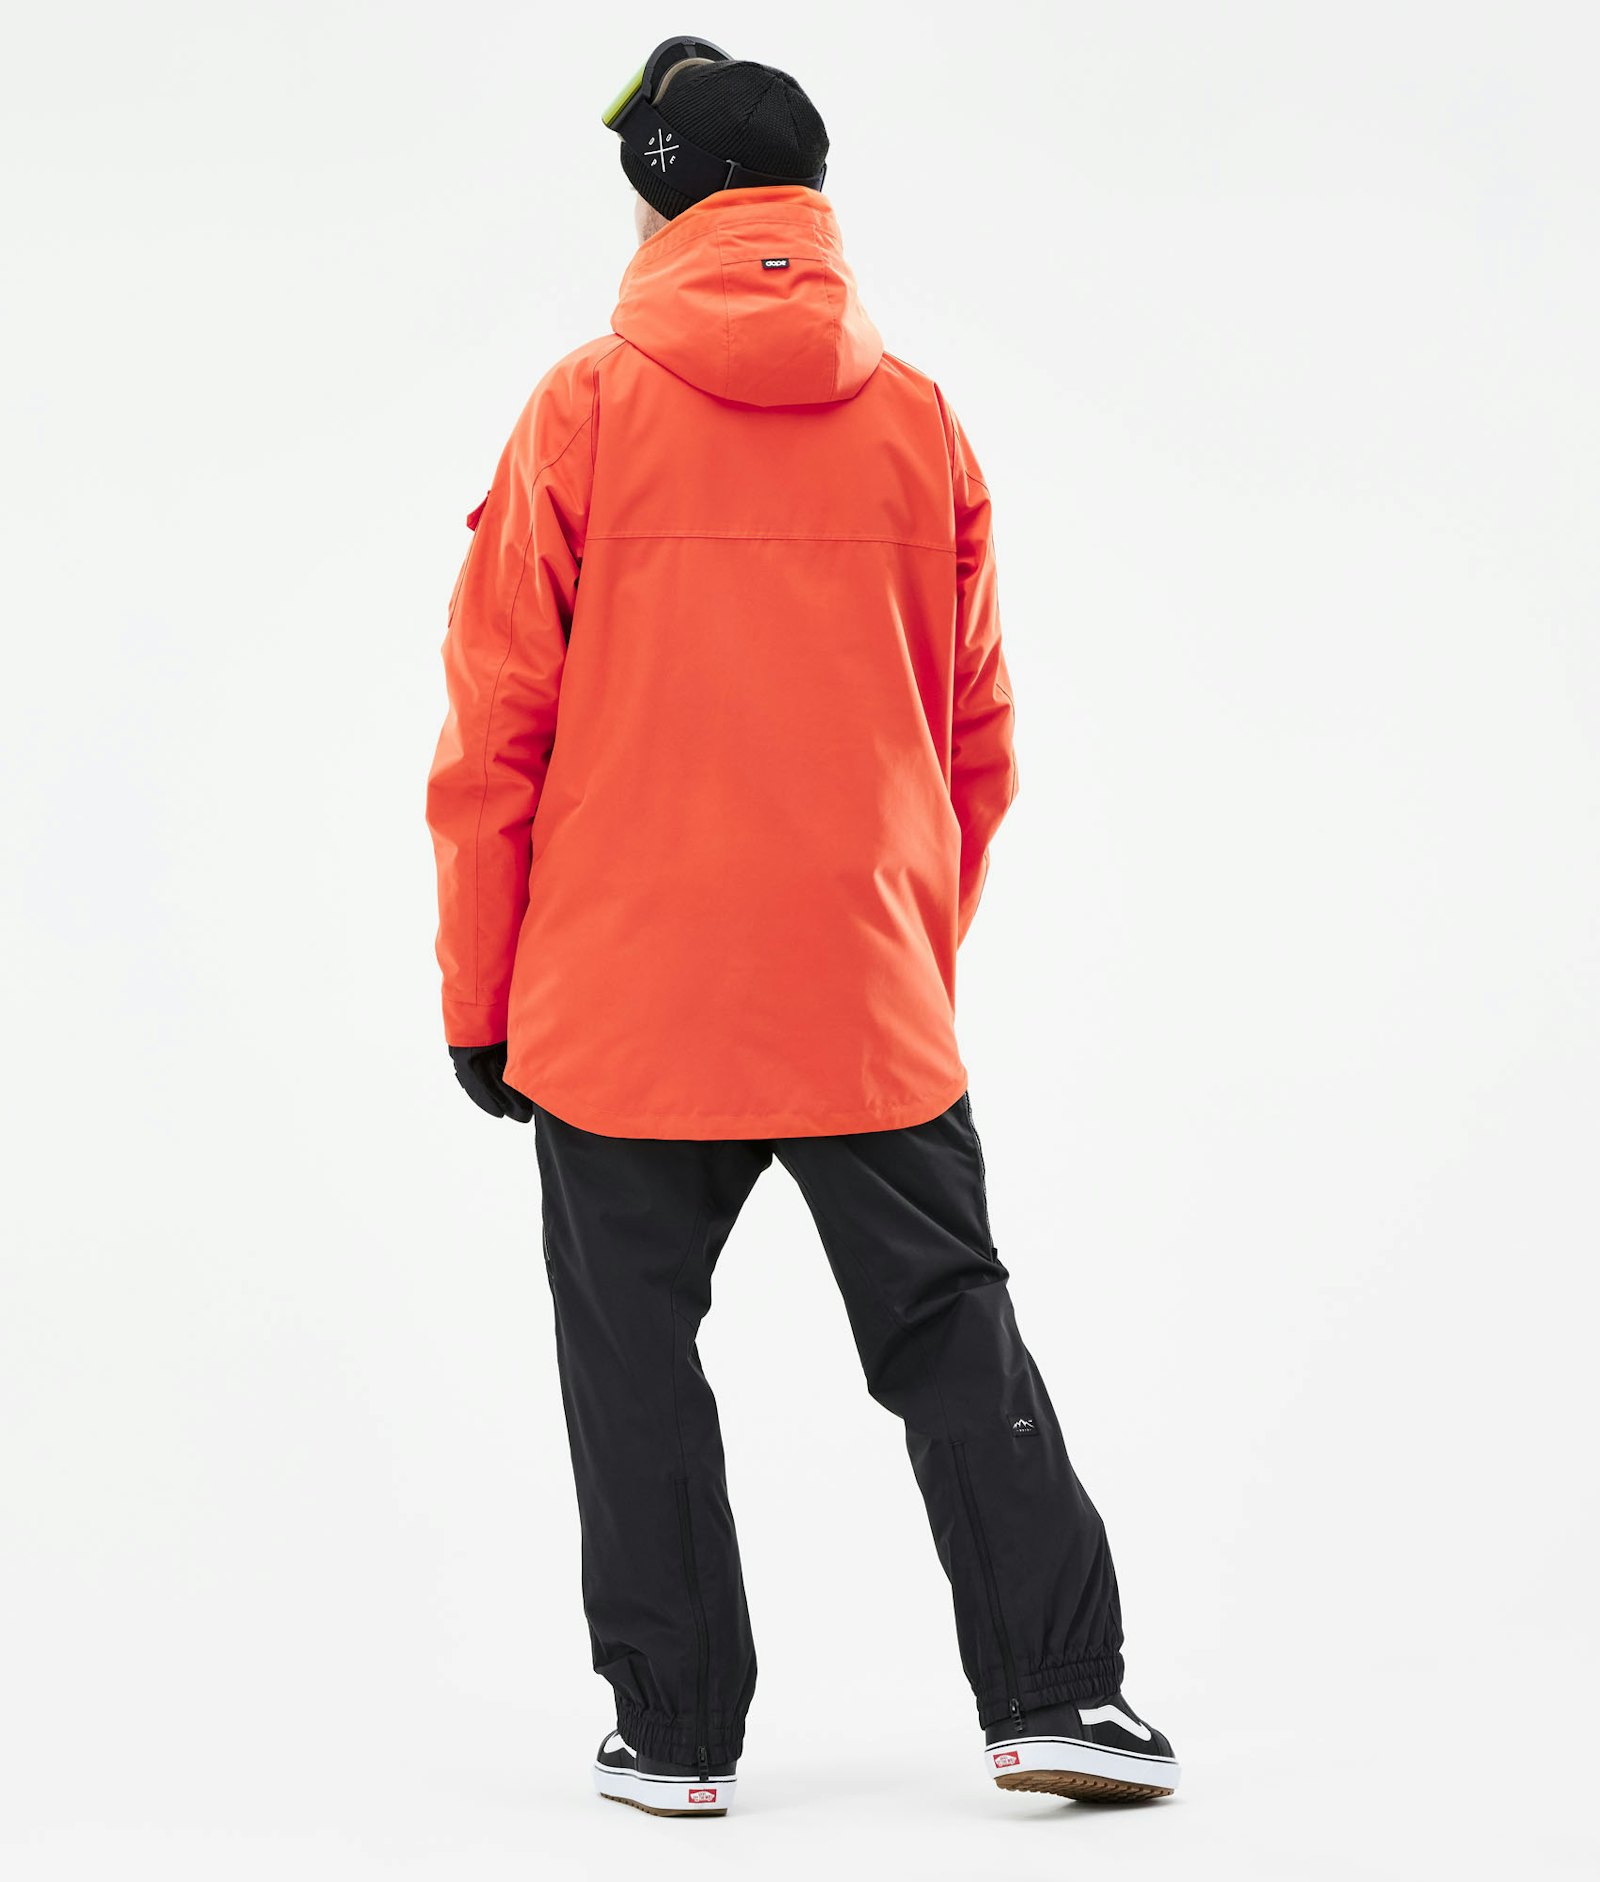 Akin 2021 Snowboardjakke Herre Orange